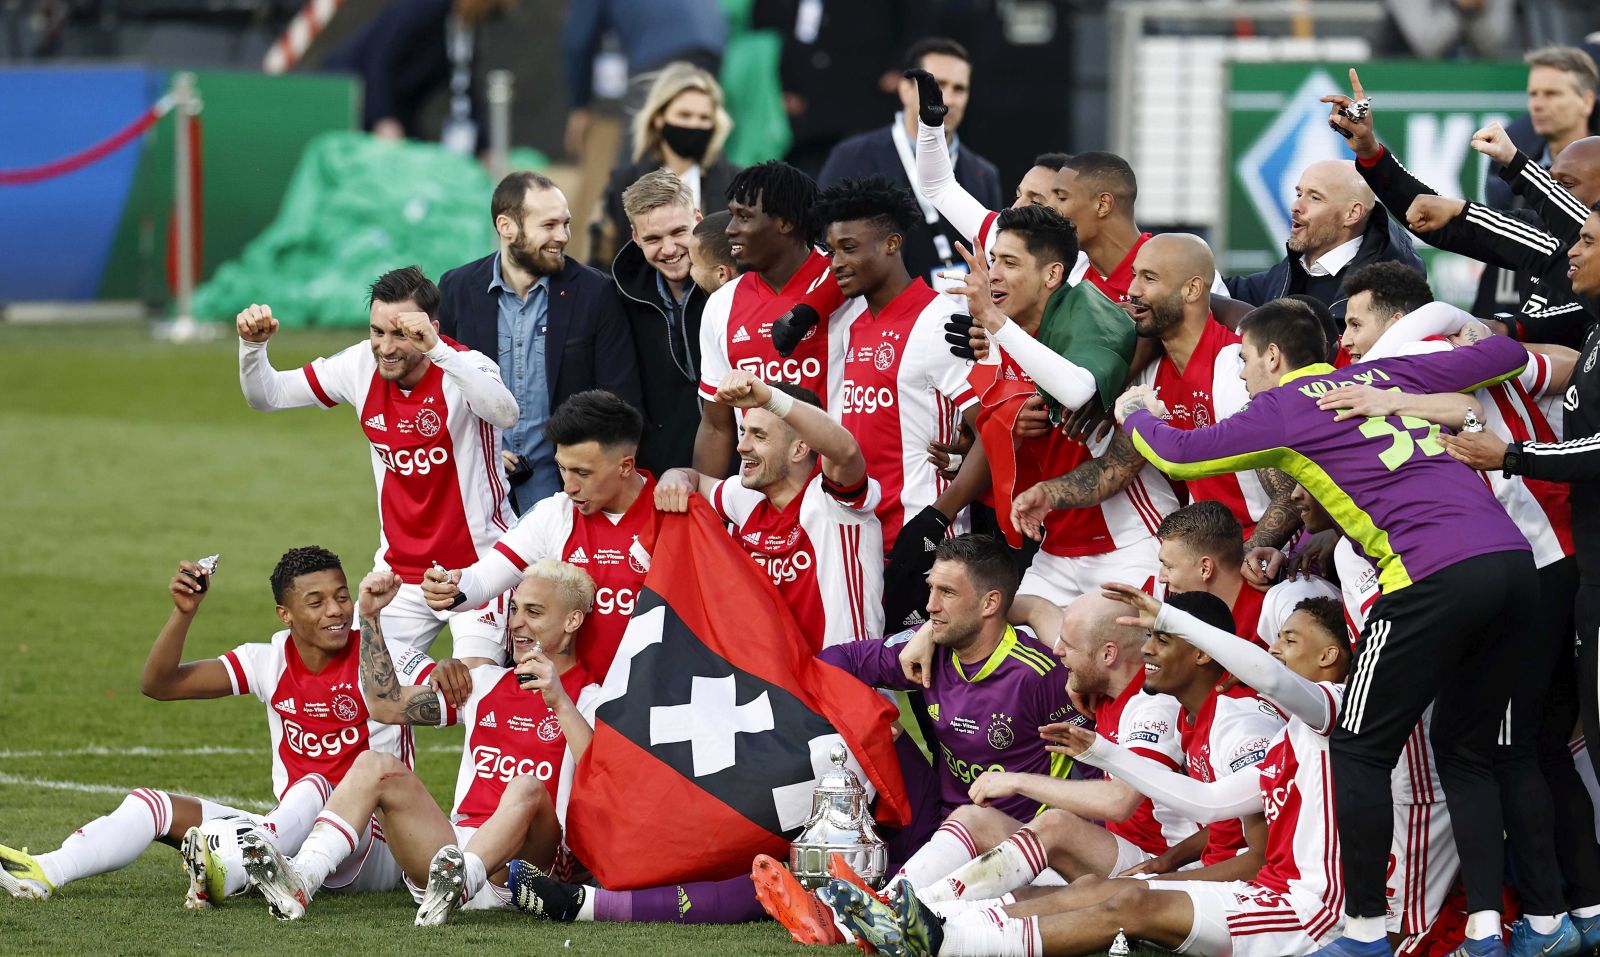 epa09144205 Players of Ajax celebrate after winning the Toto KNVB cup final match between Ajax Amsterdam and Vitesse Arnhem in Rotterdam, The Netherlands, 18 April 2021.  EPA/MAURICE VAN STEEN